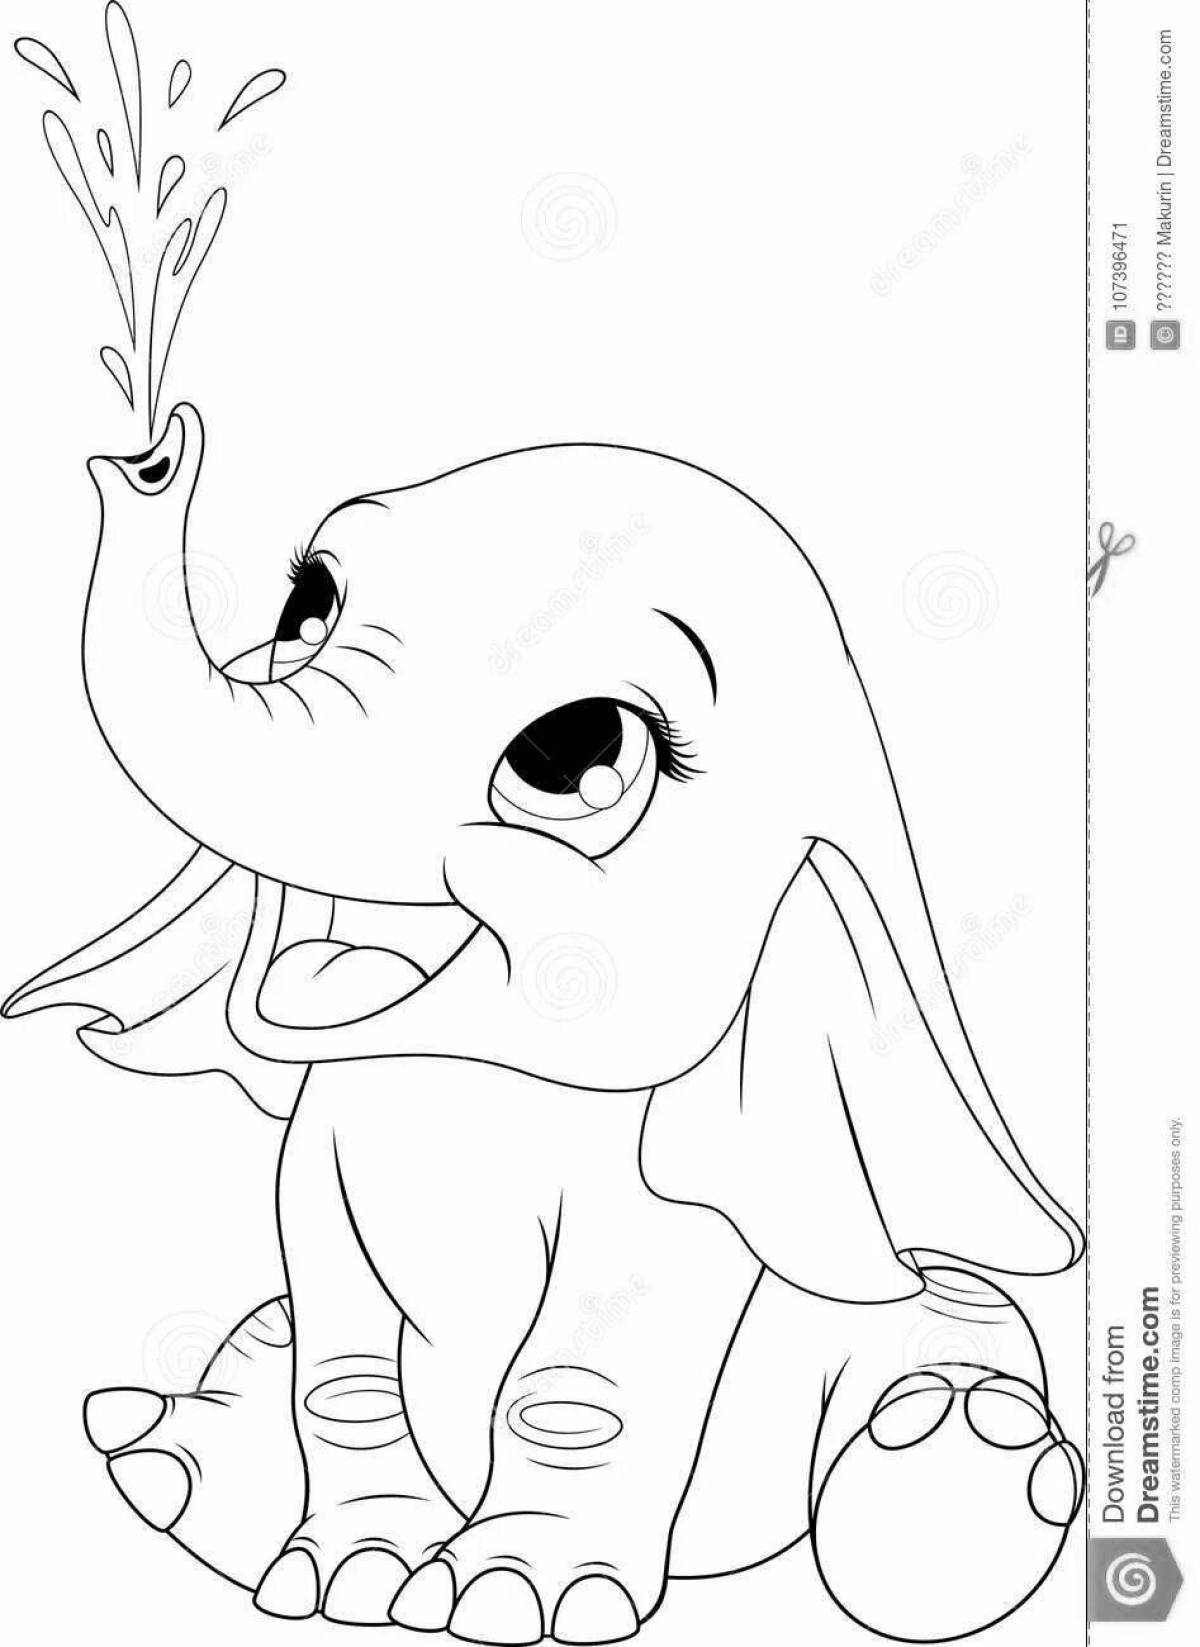 Playful coloring elephant